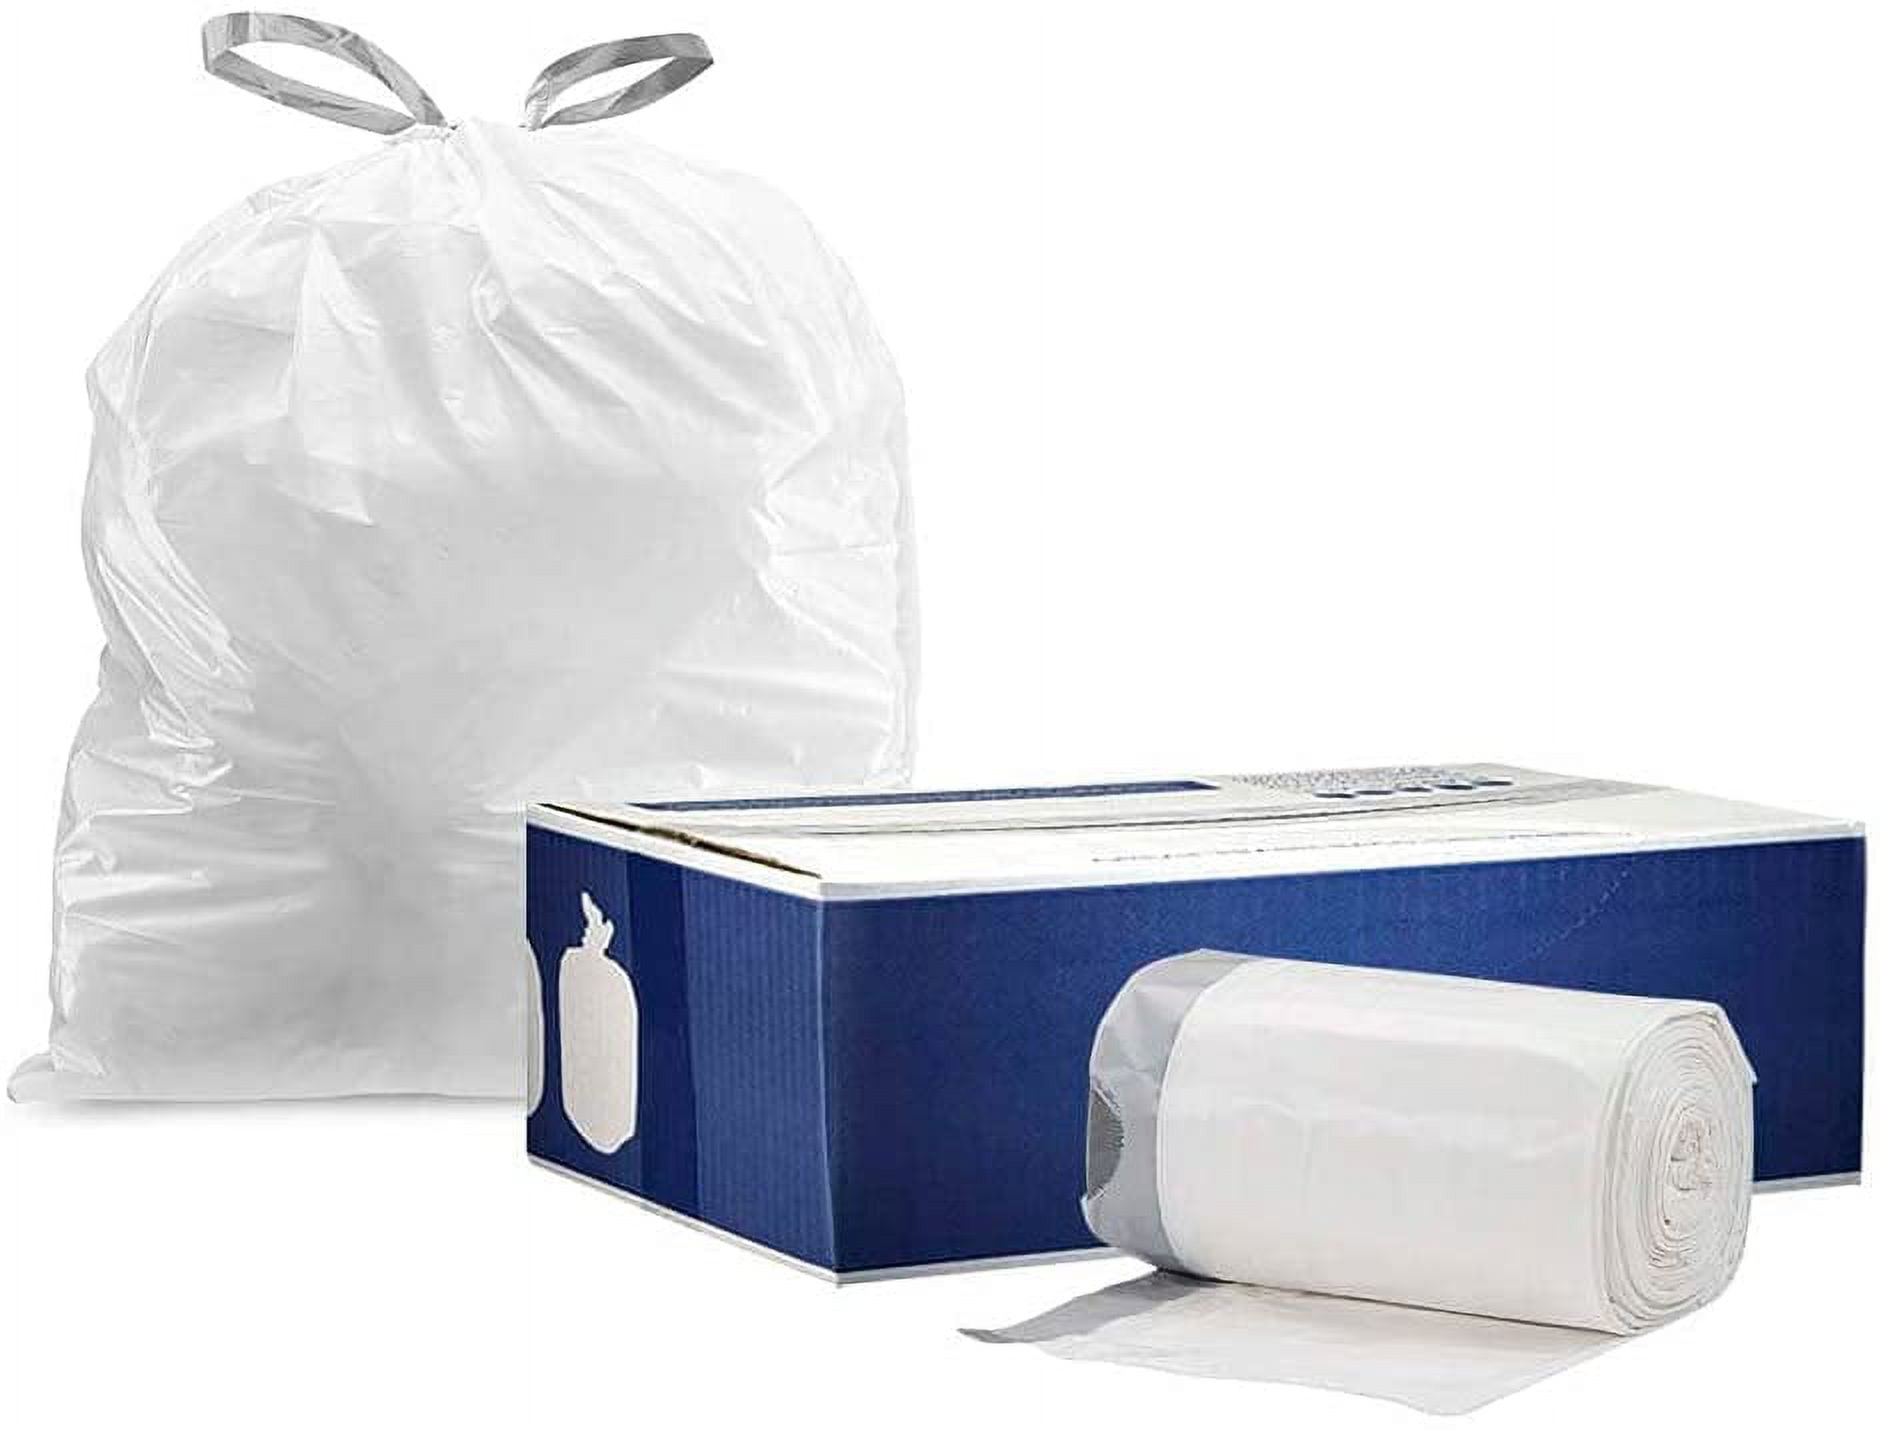 Plasticplace Trash Bags Simplehuman® Code L Compatible (200 Count